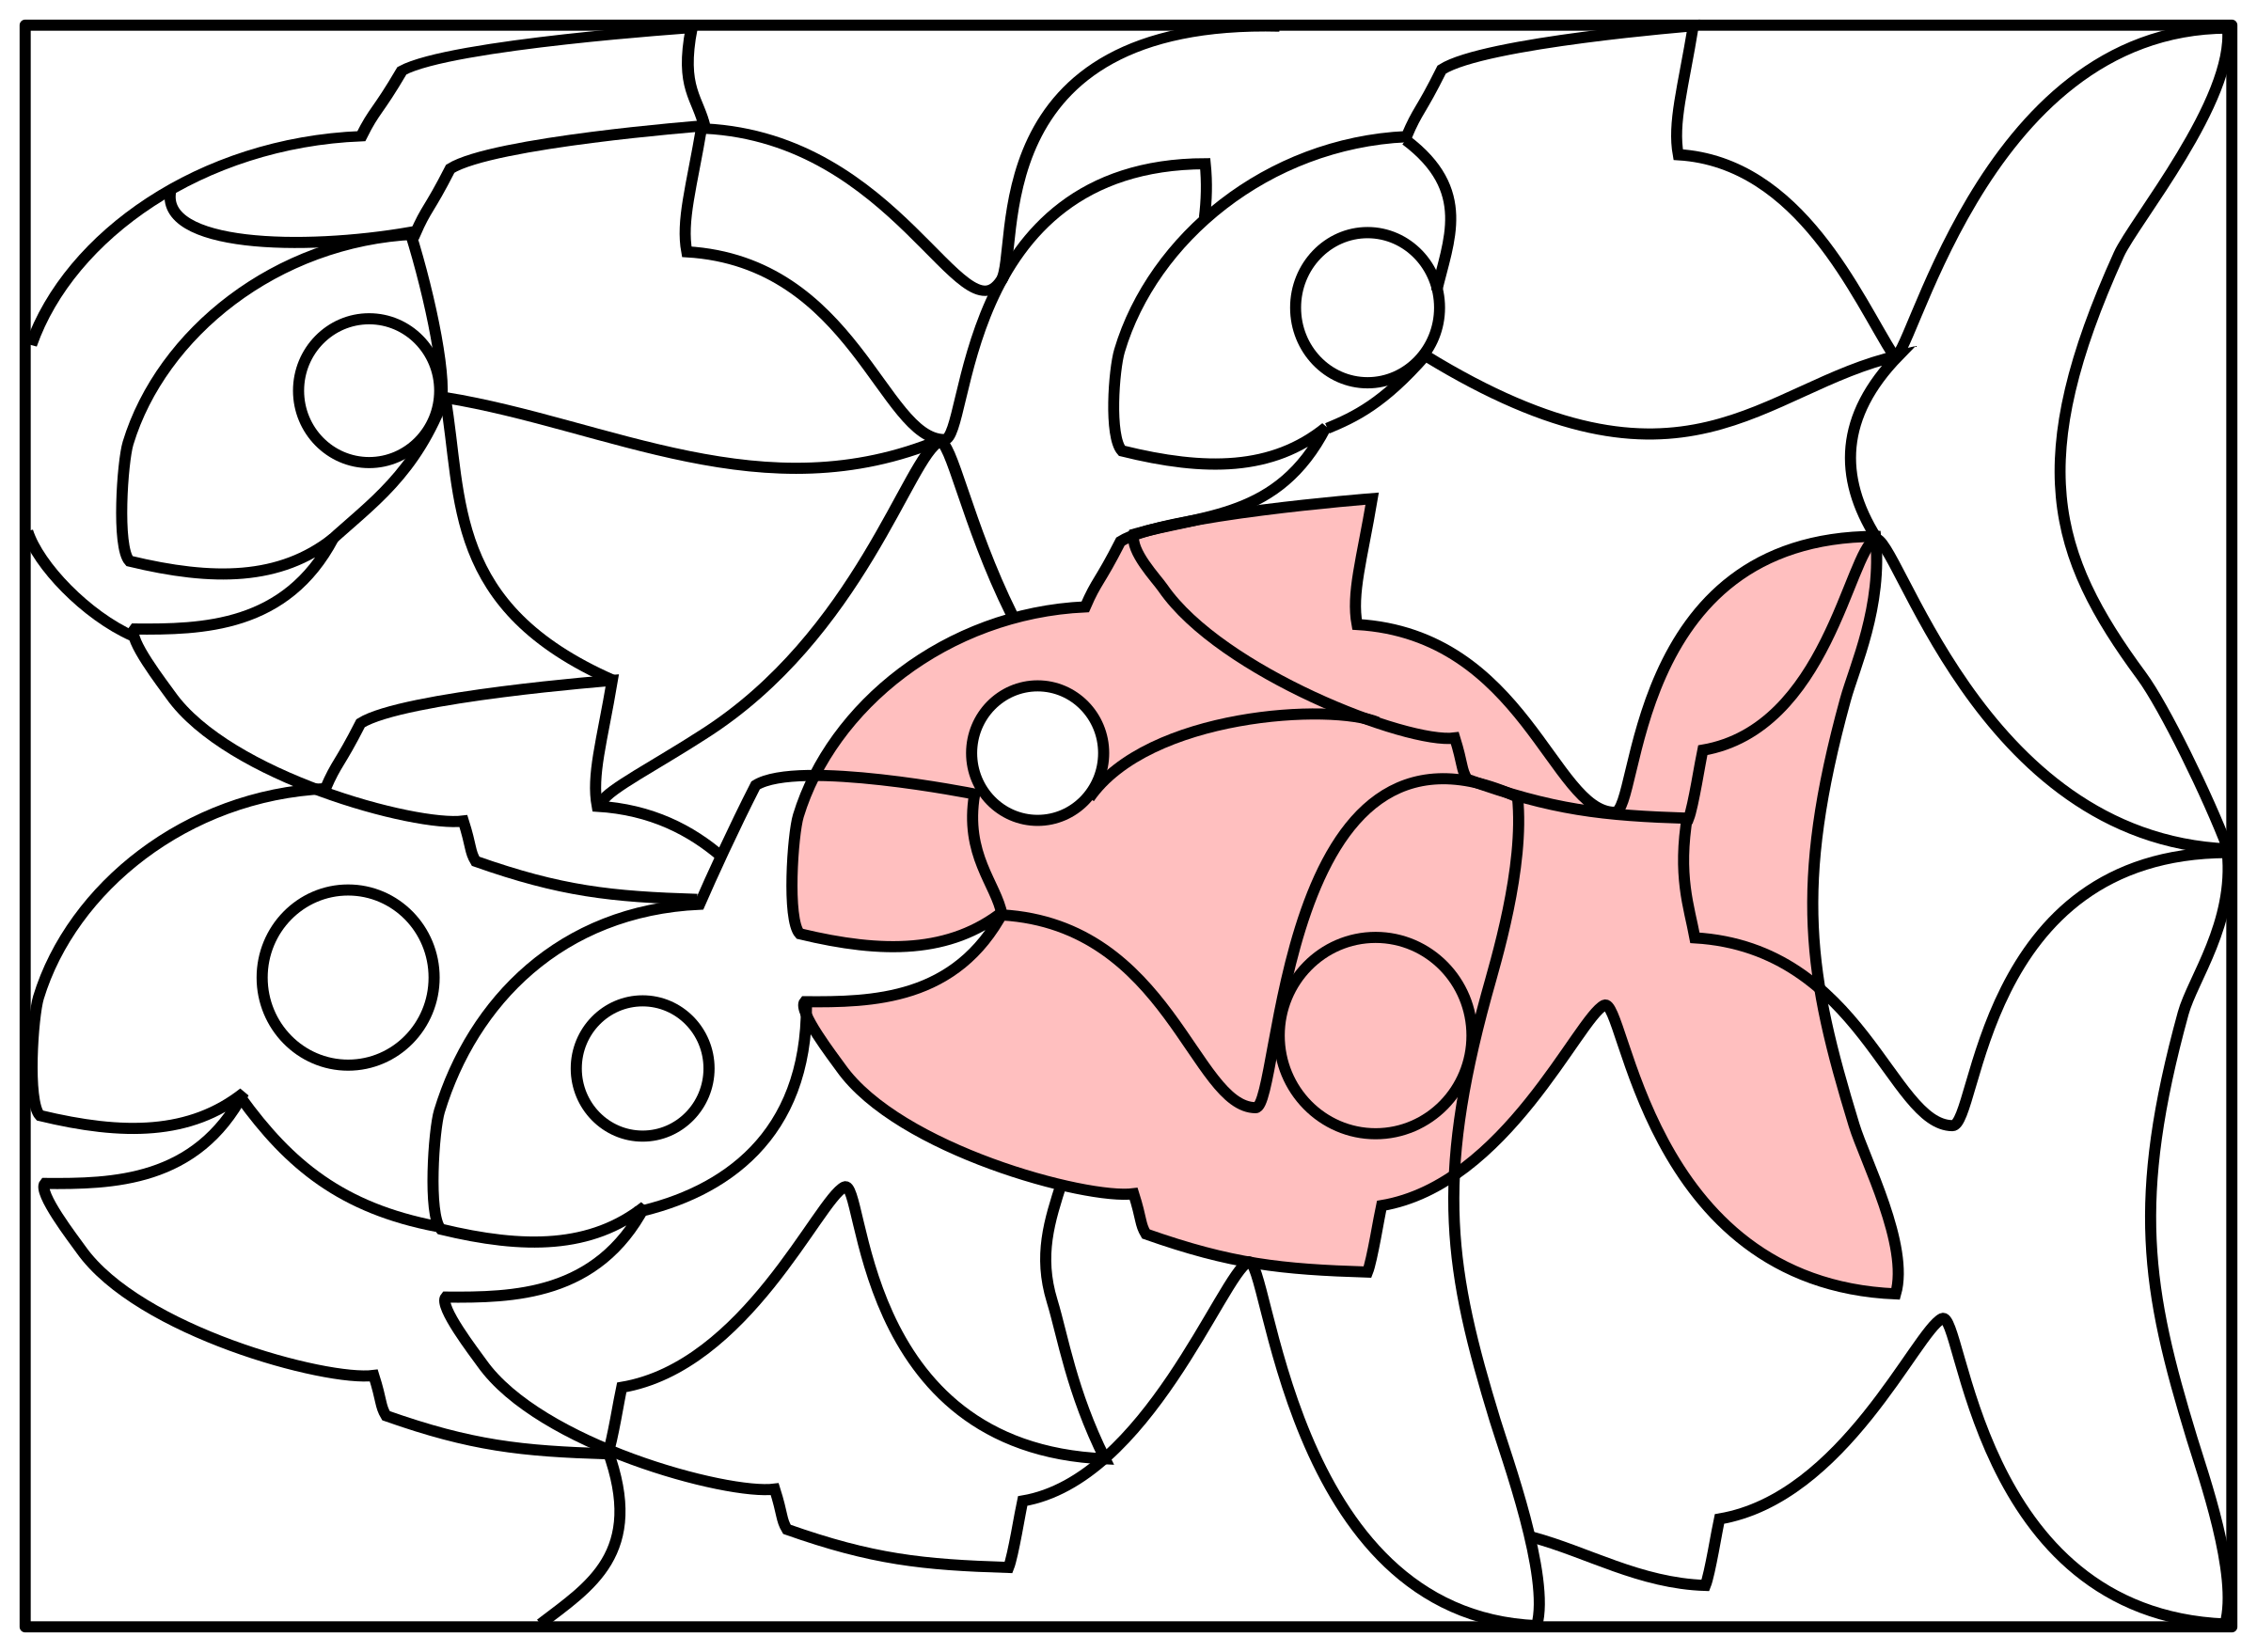 fish clipart symmetrical